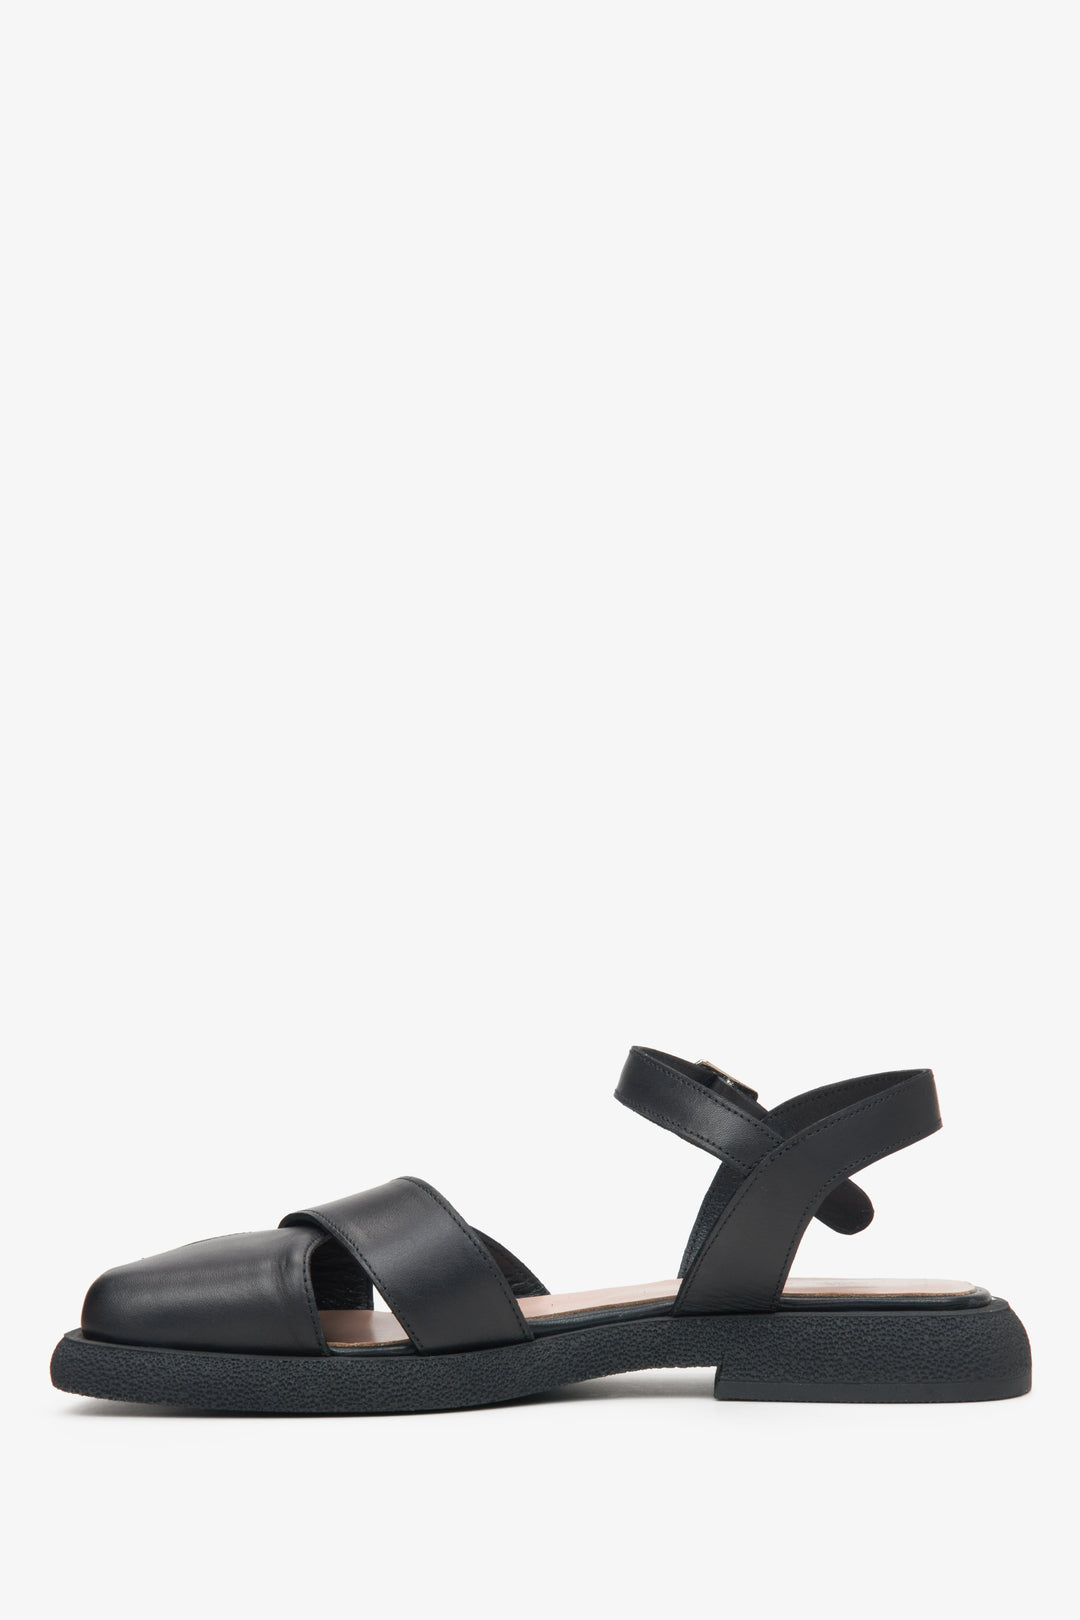 Skórzane czarne sandały damskie Estro - profil buta.